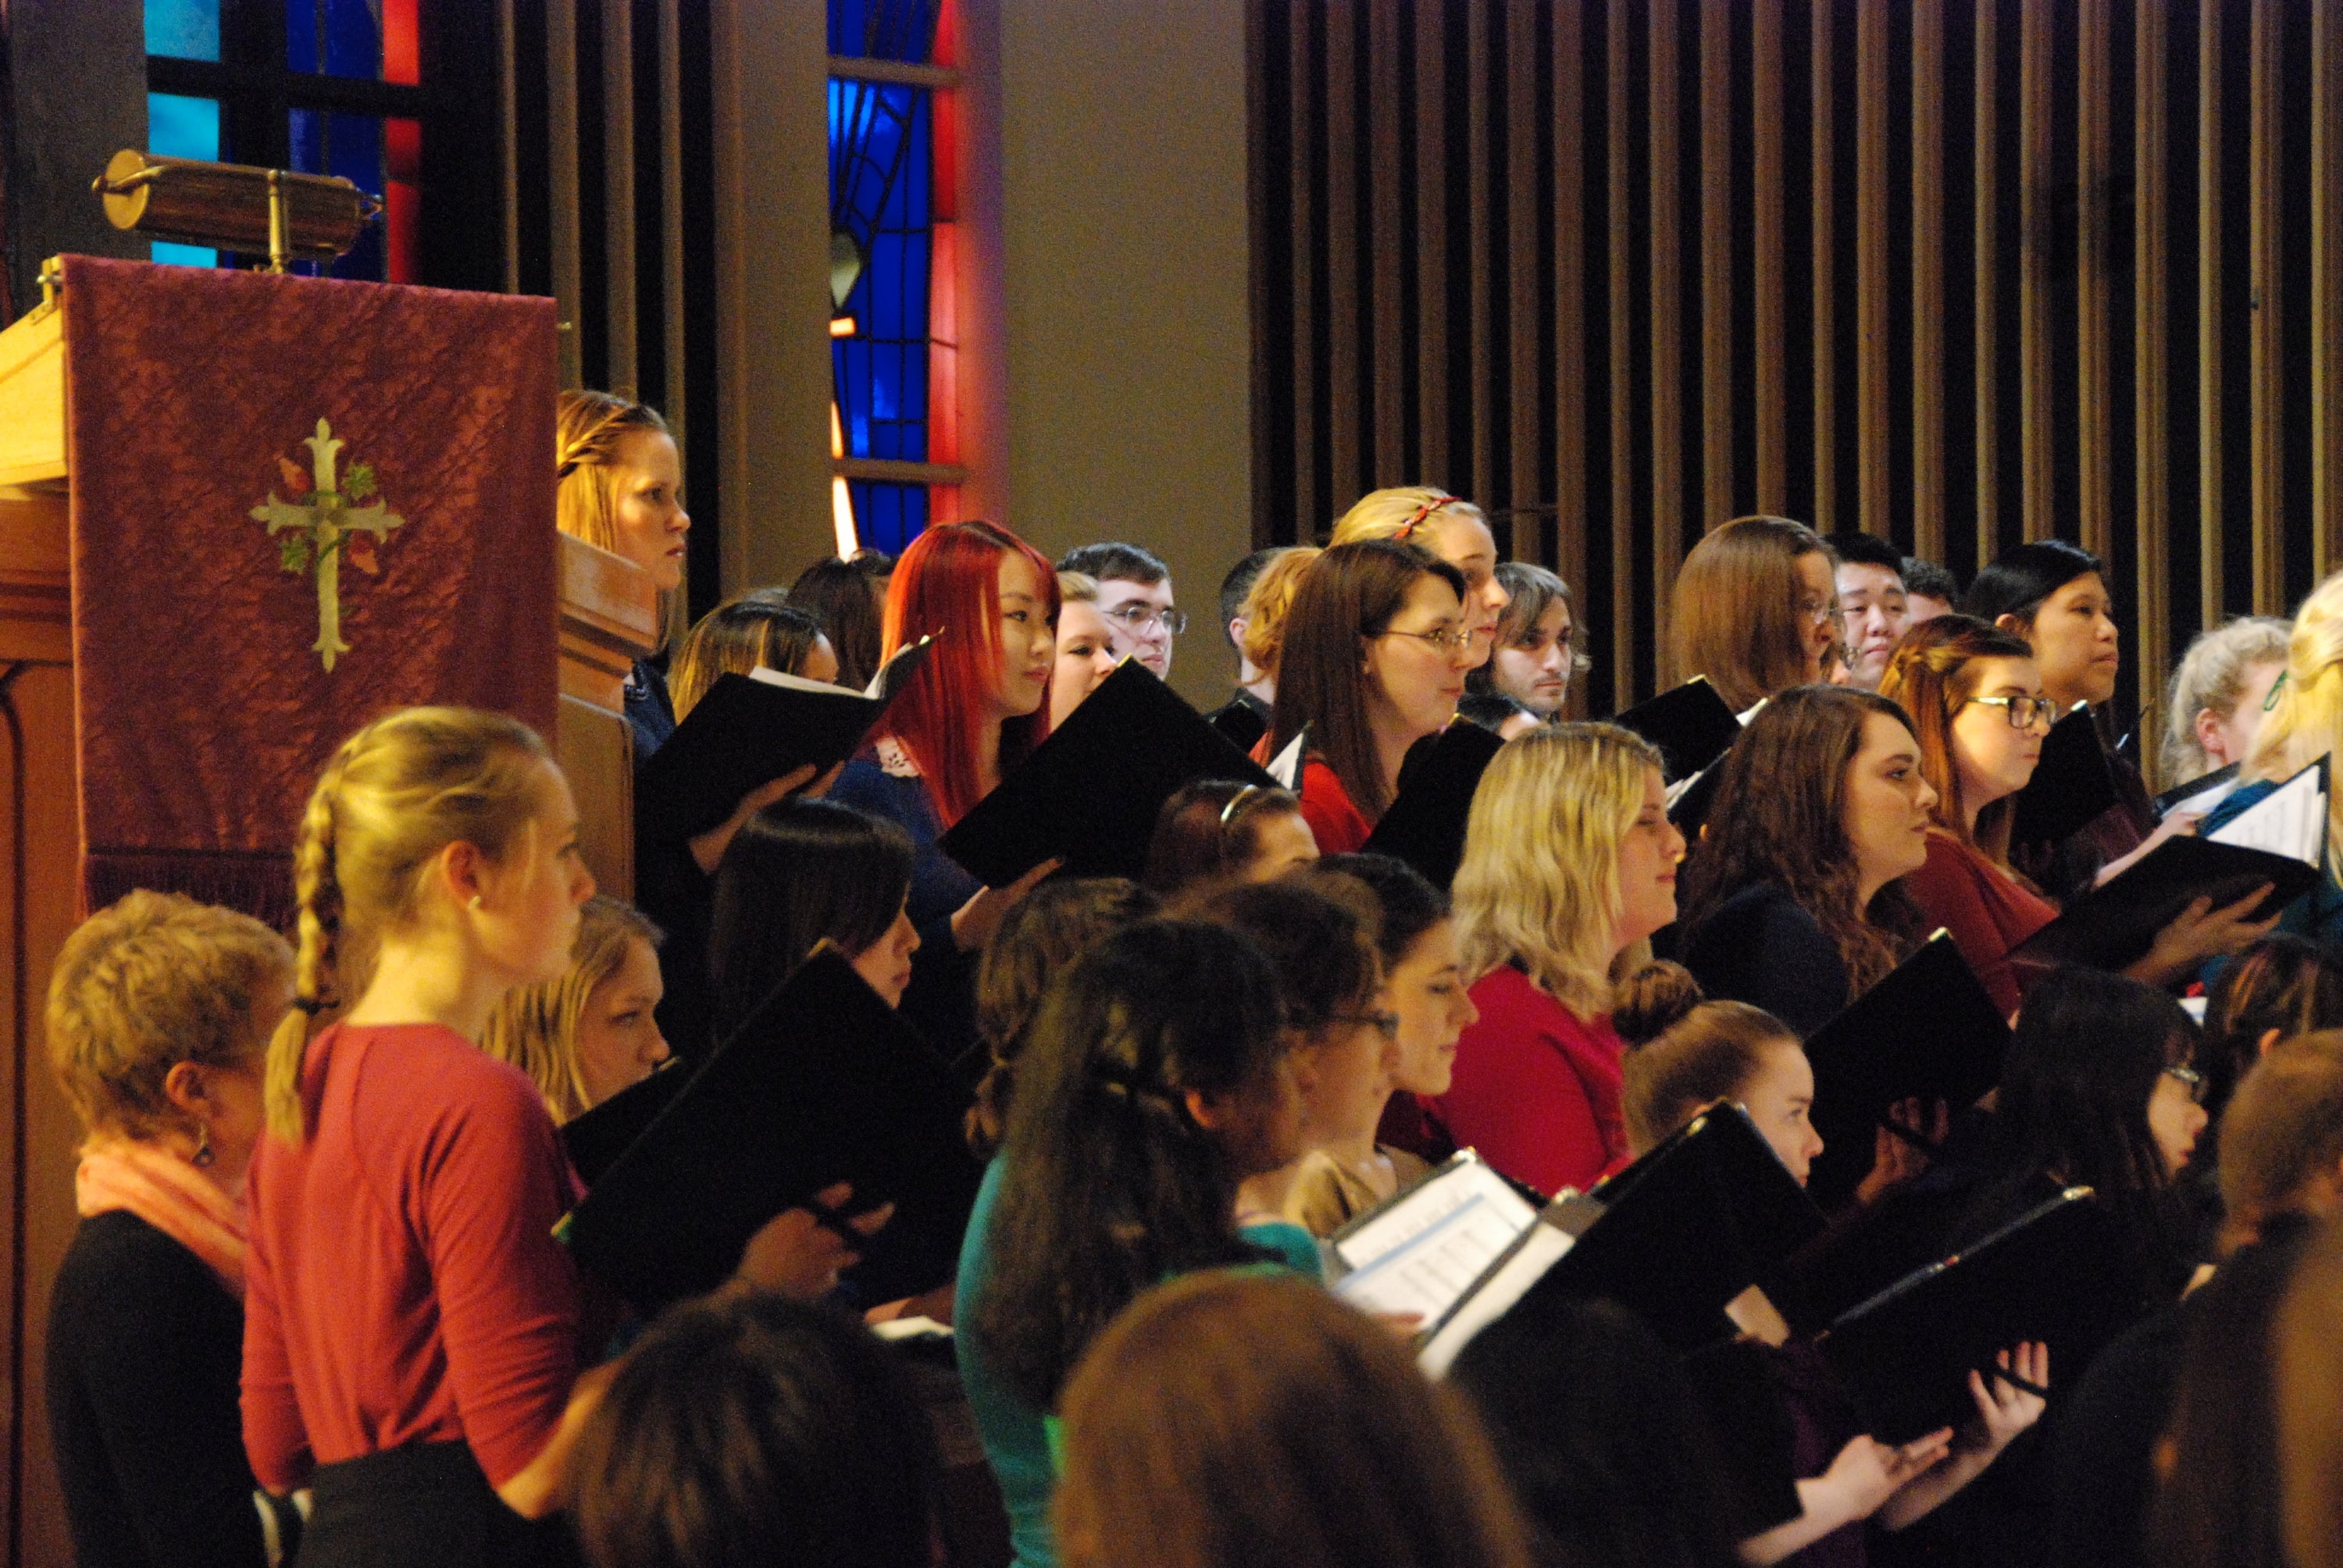 University Choir